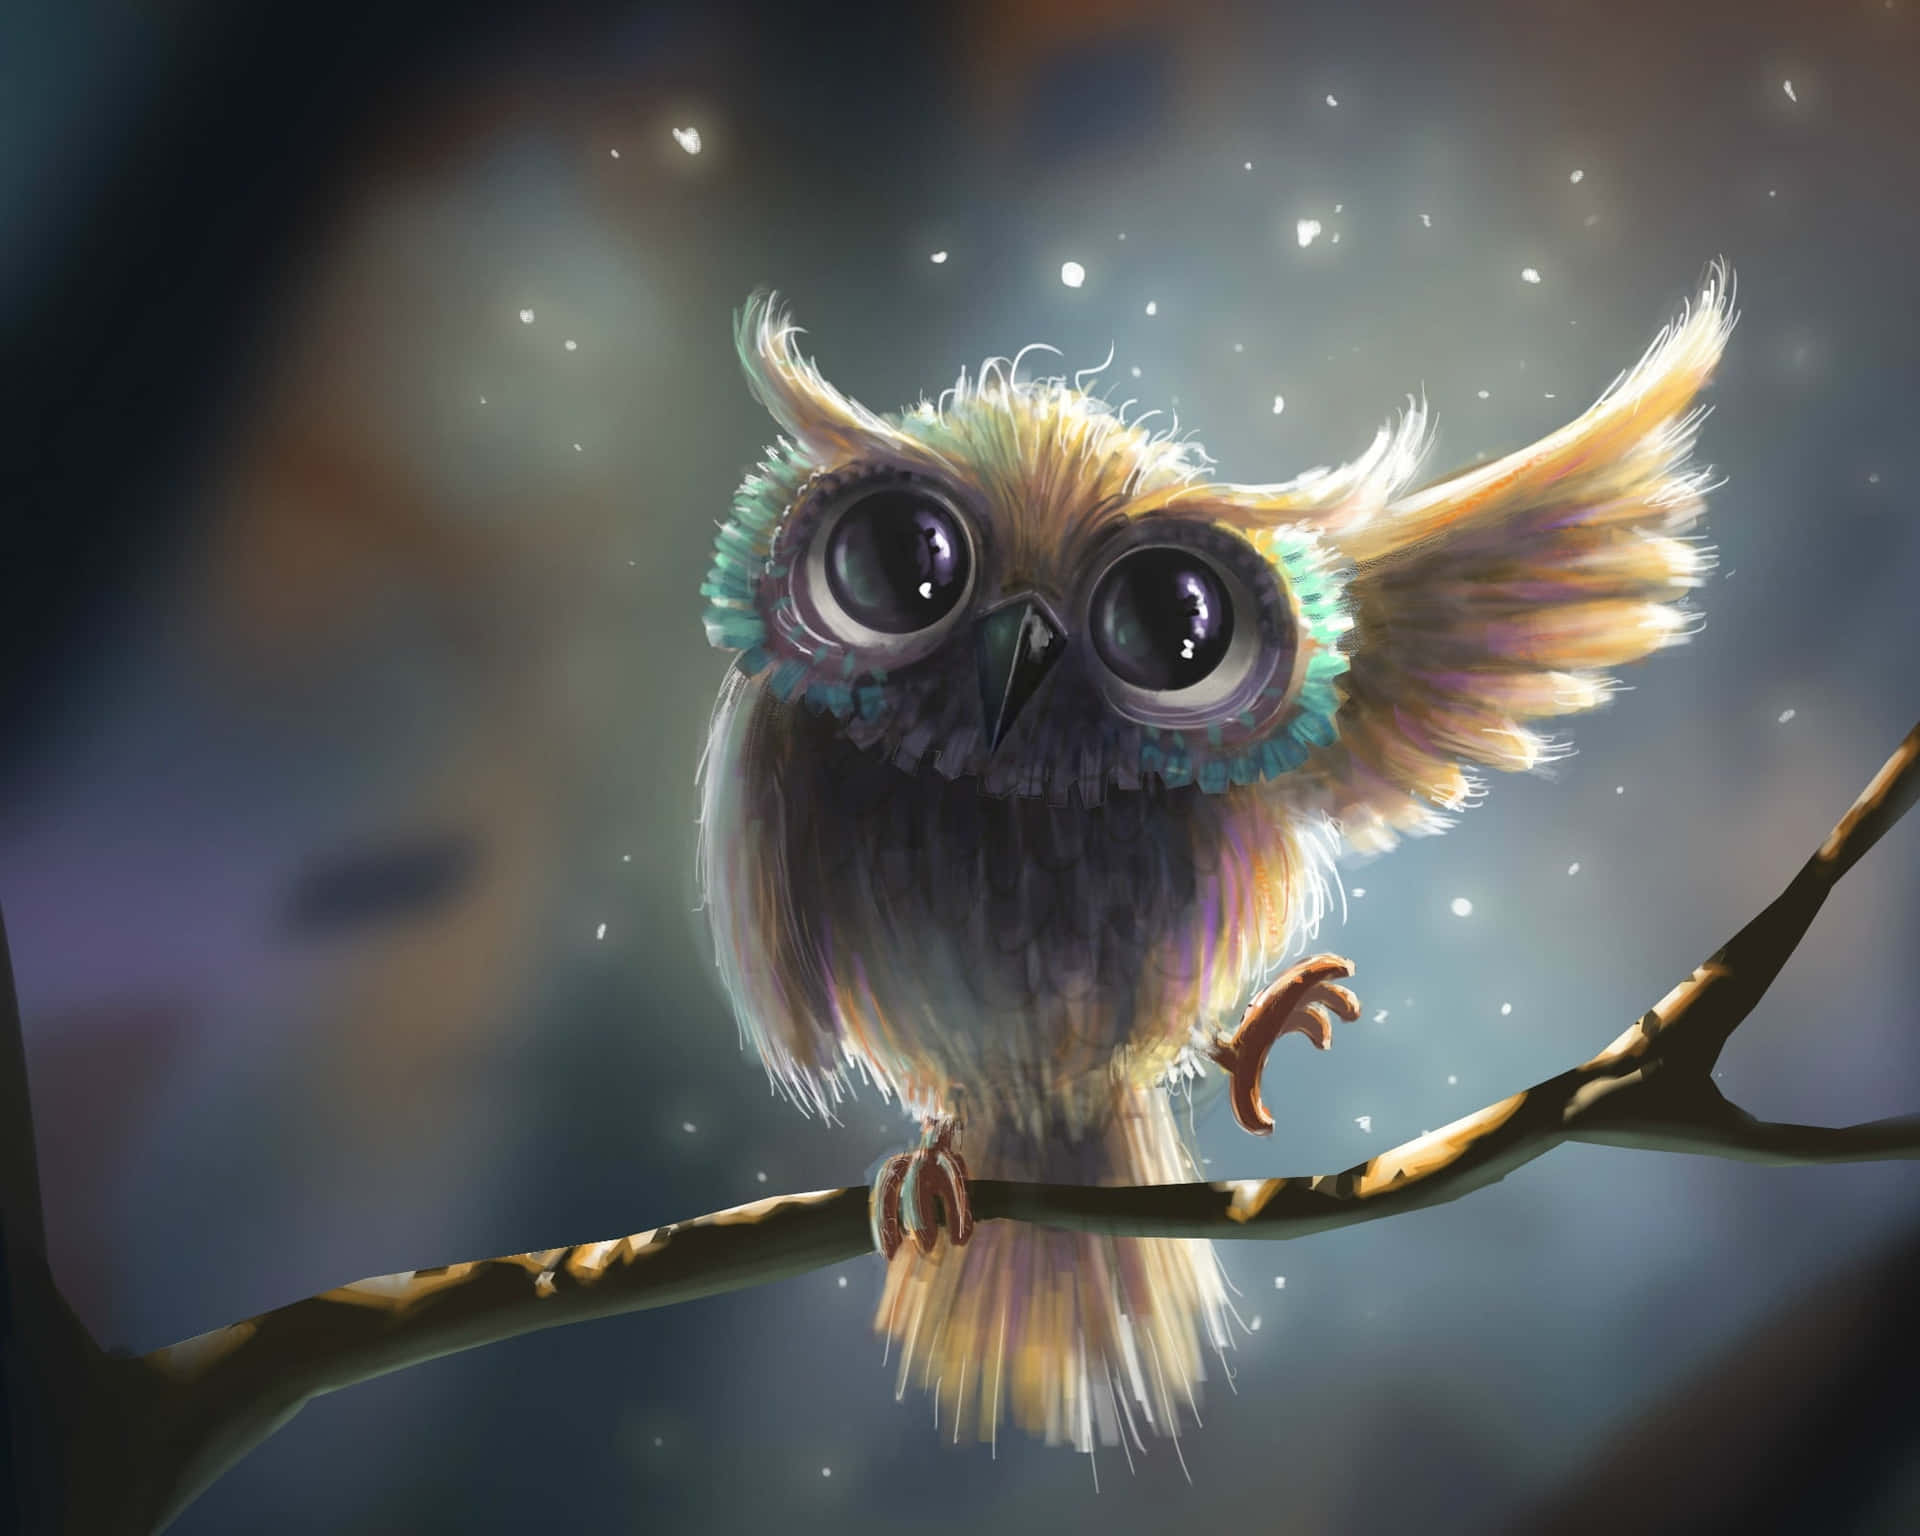 Cute little owl looks adorable